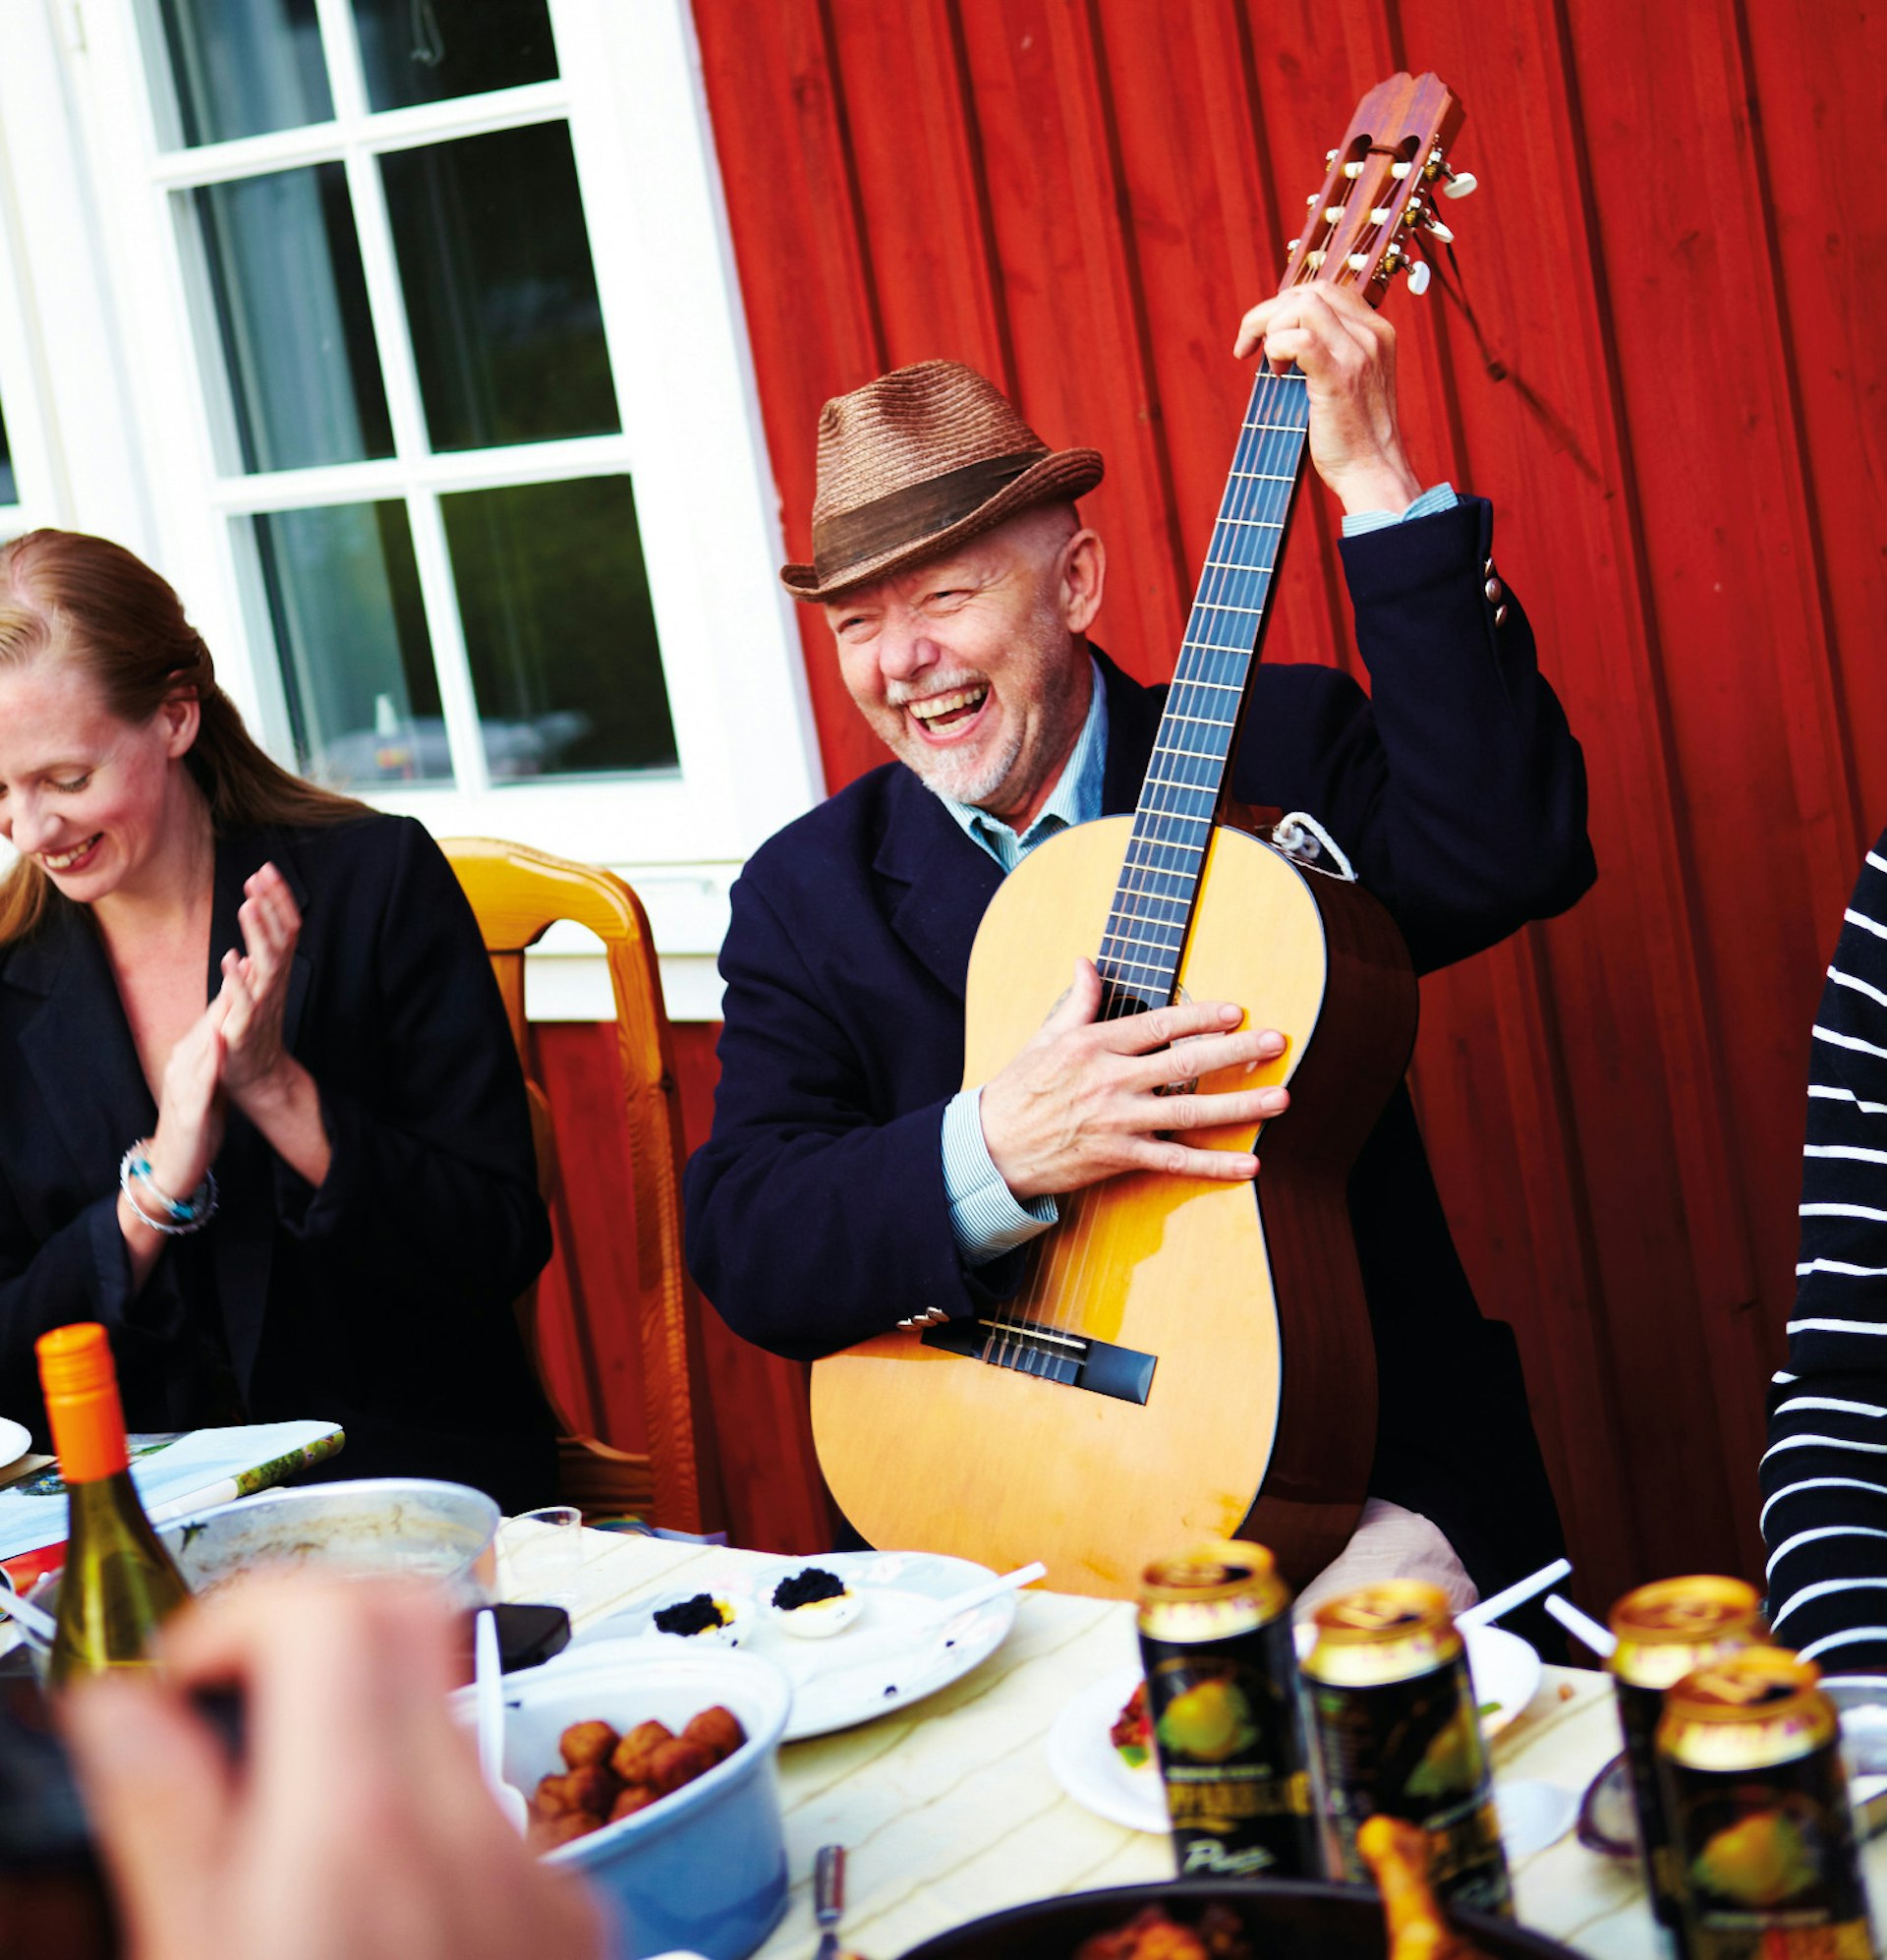 Man playing guitar at table during Midsummer celebrations.